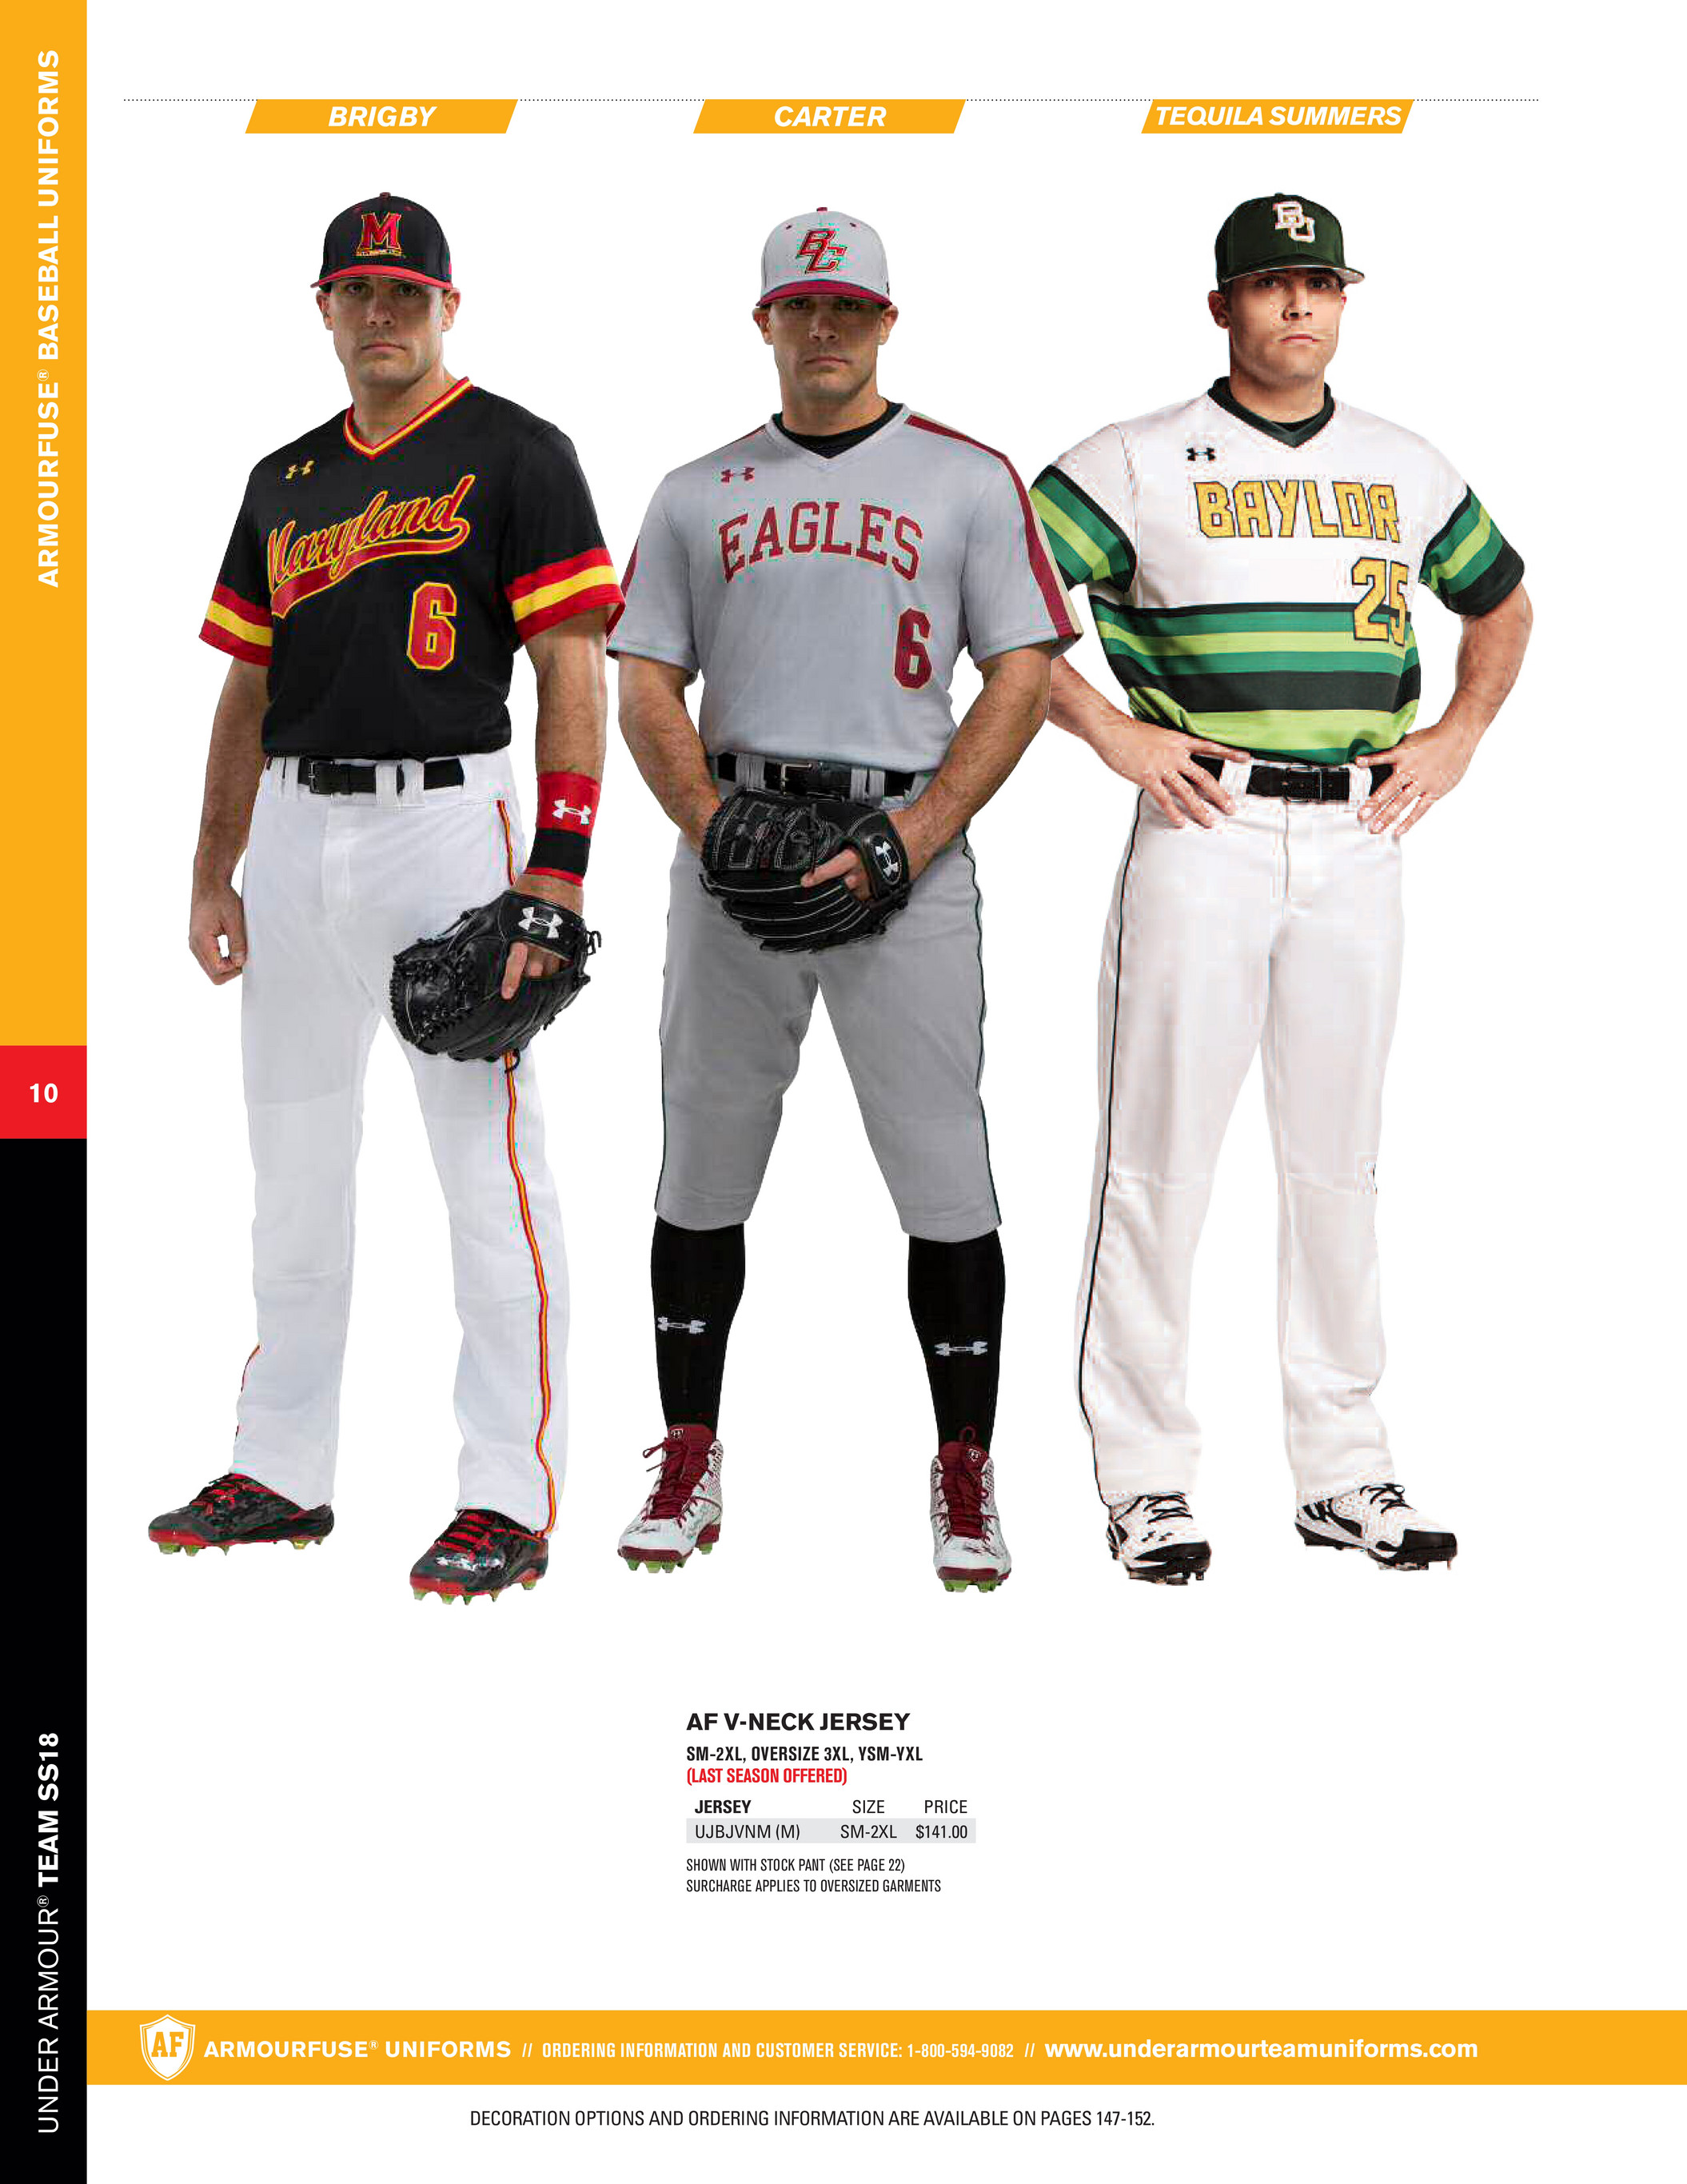 My publications - UA SS18 Baseball Uniforms - Page 4-5